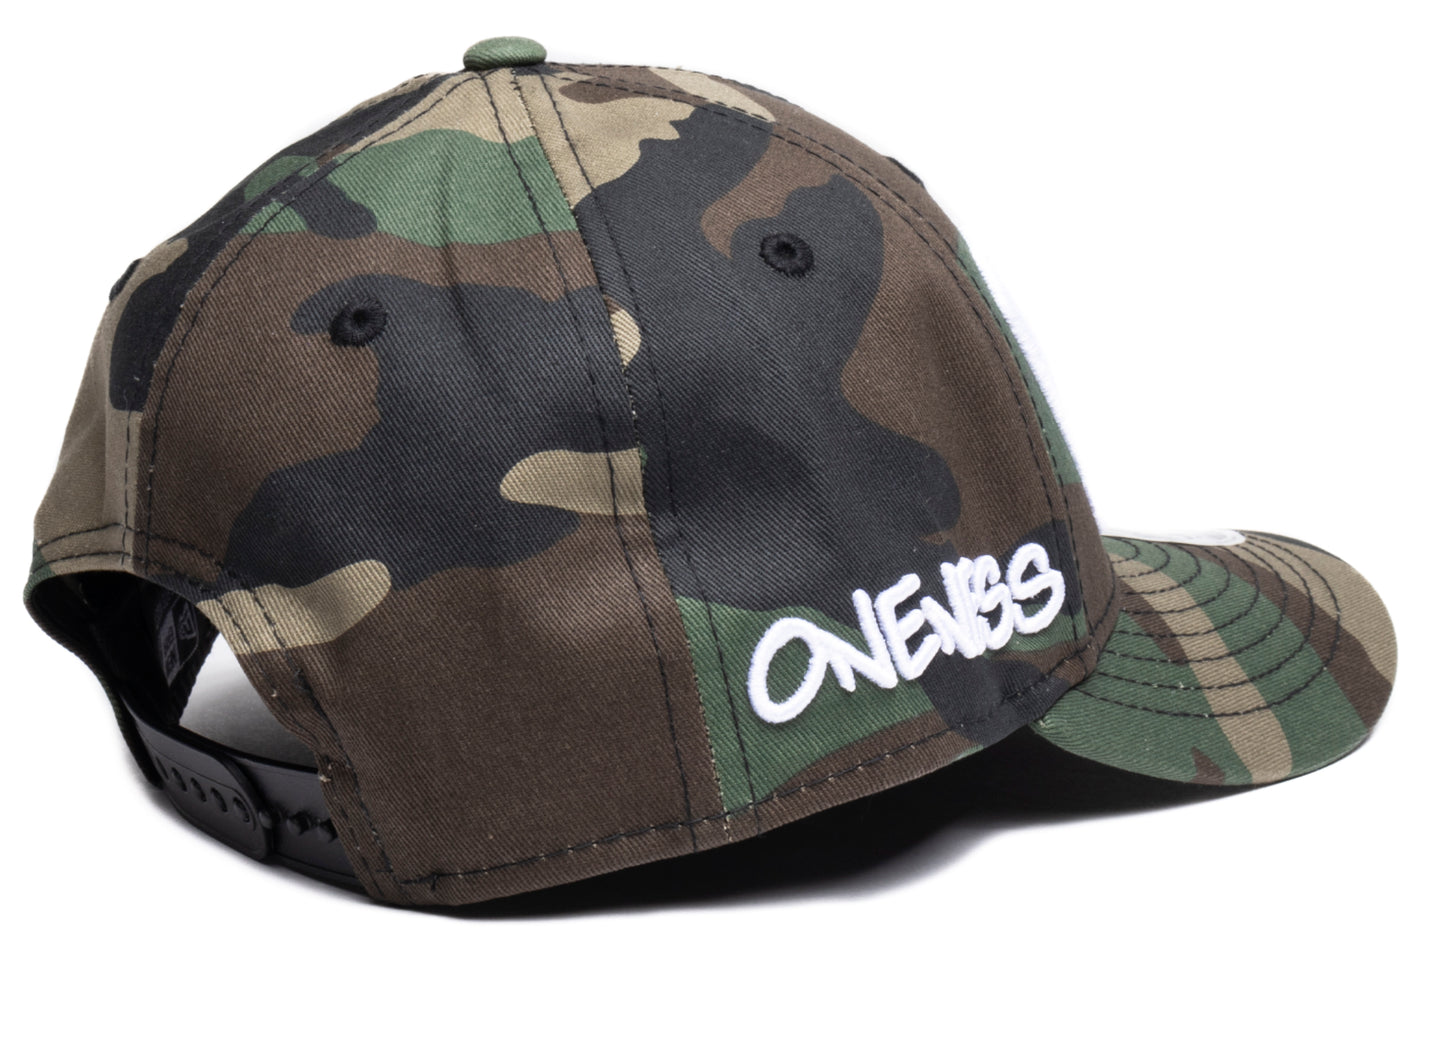 Oneness x New Era Snapback CATS Hat in Woodland Camo